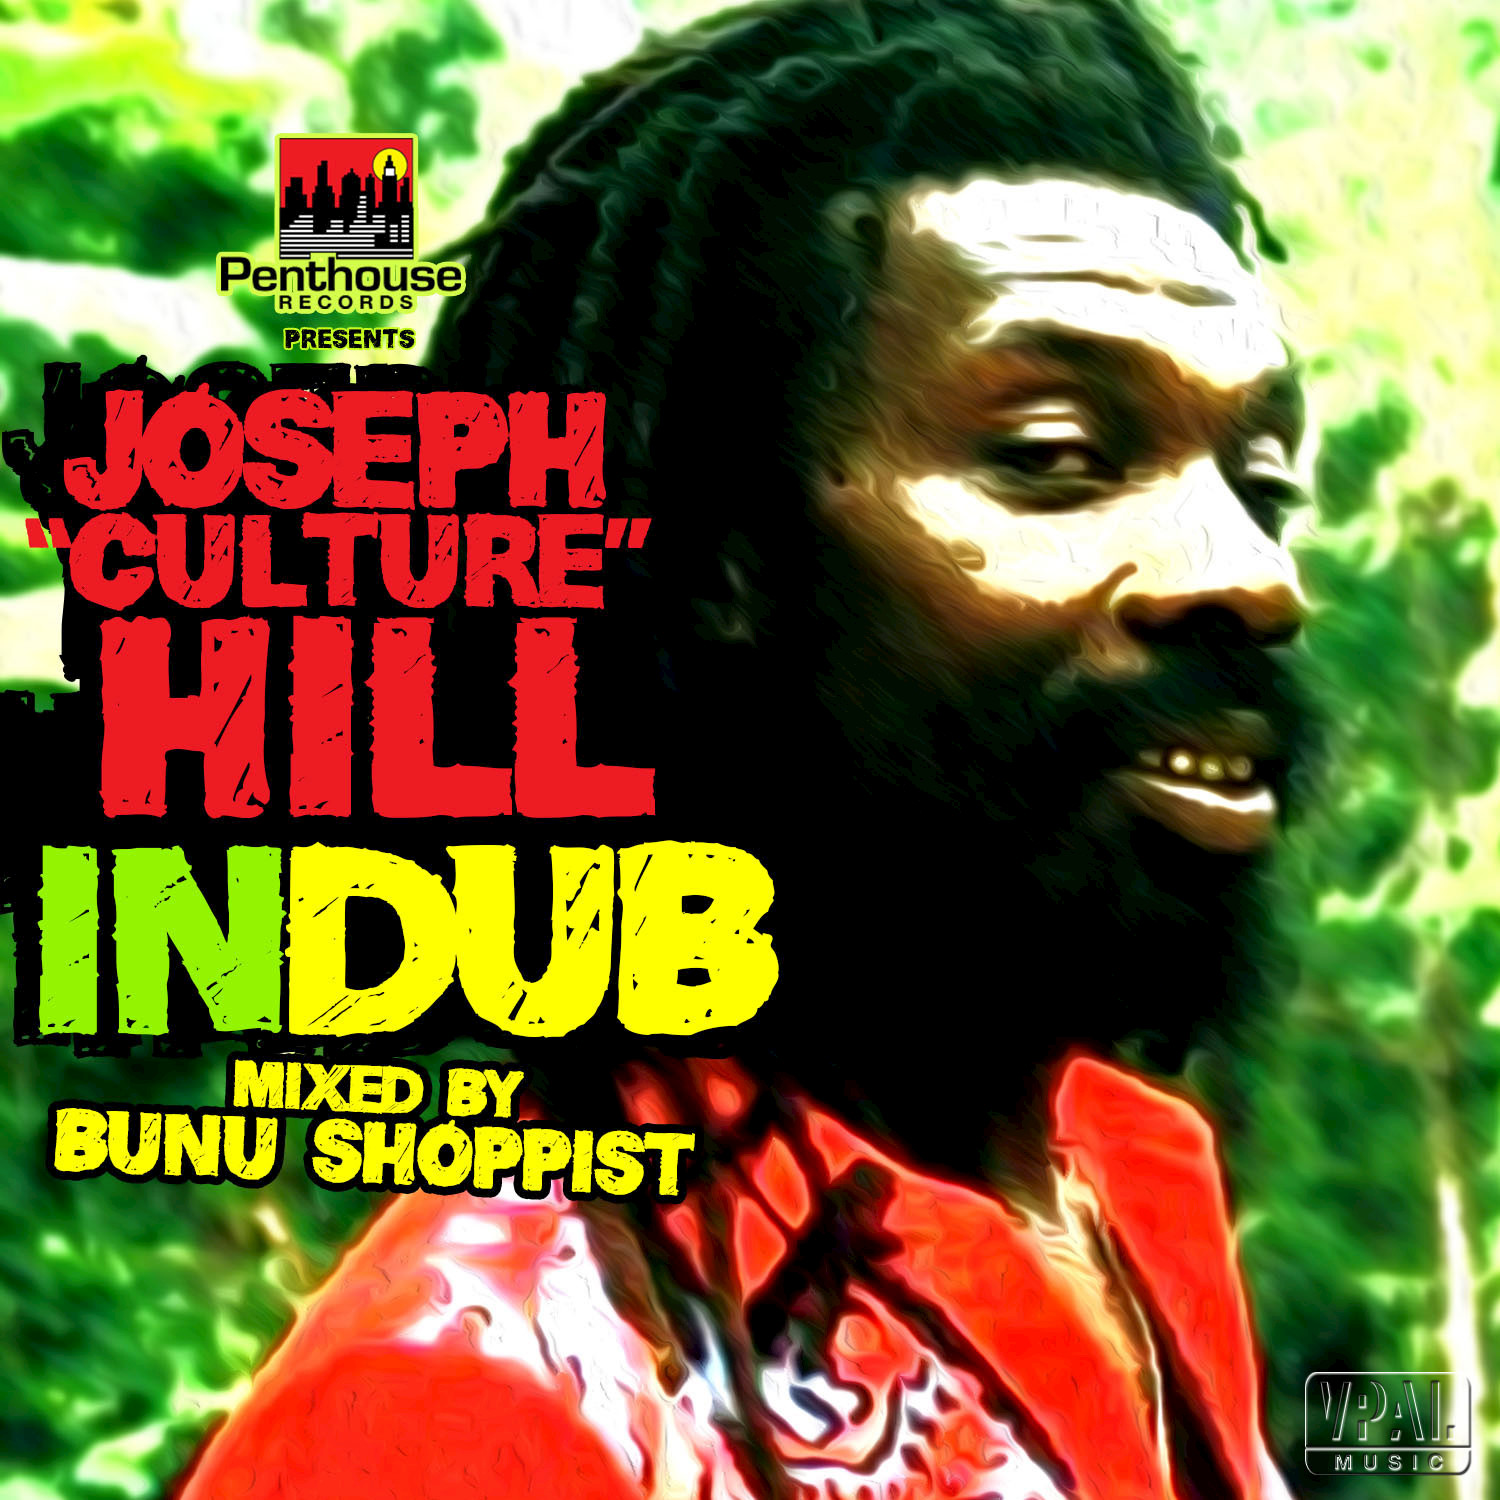 Down in Jamaica (Bunu Shoppist Mix)